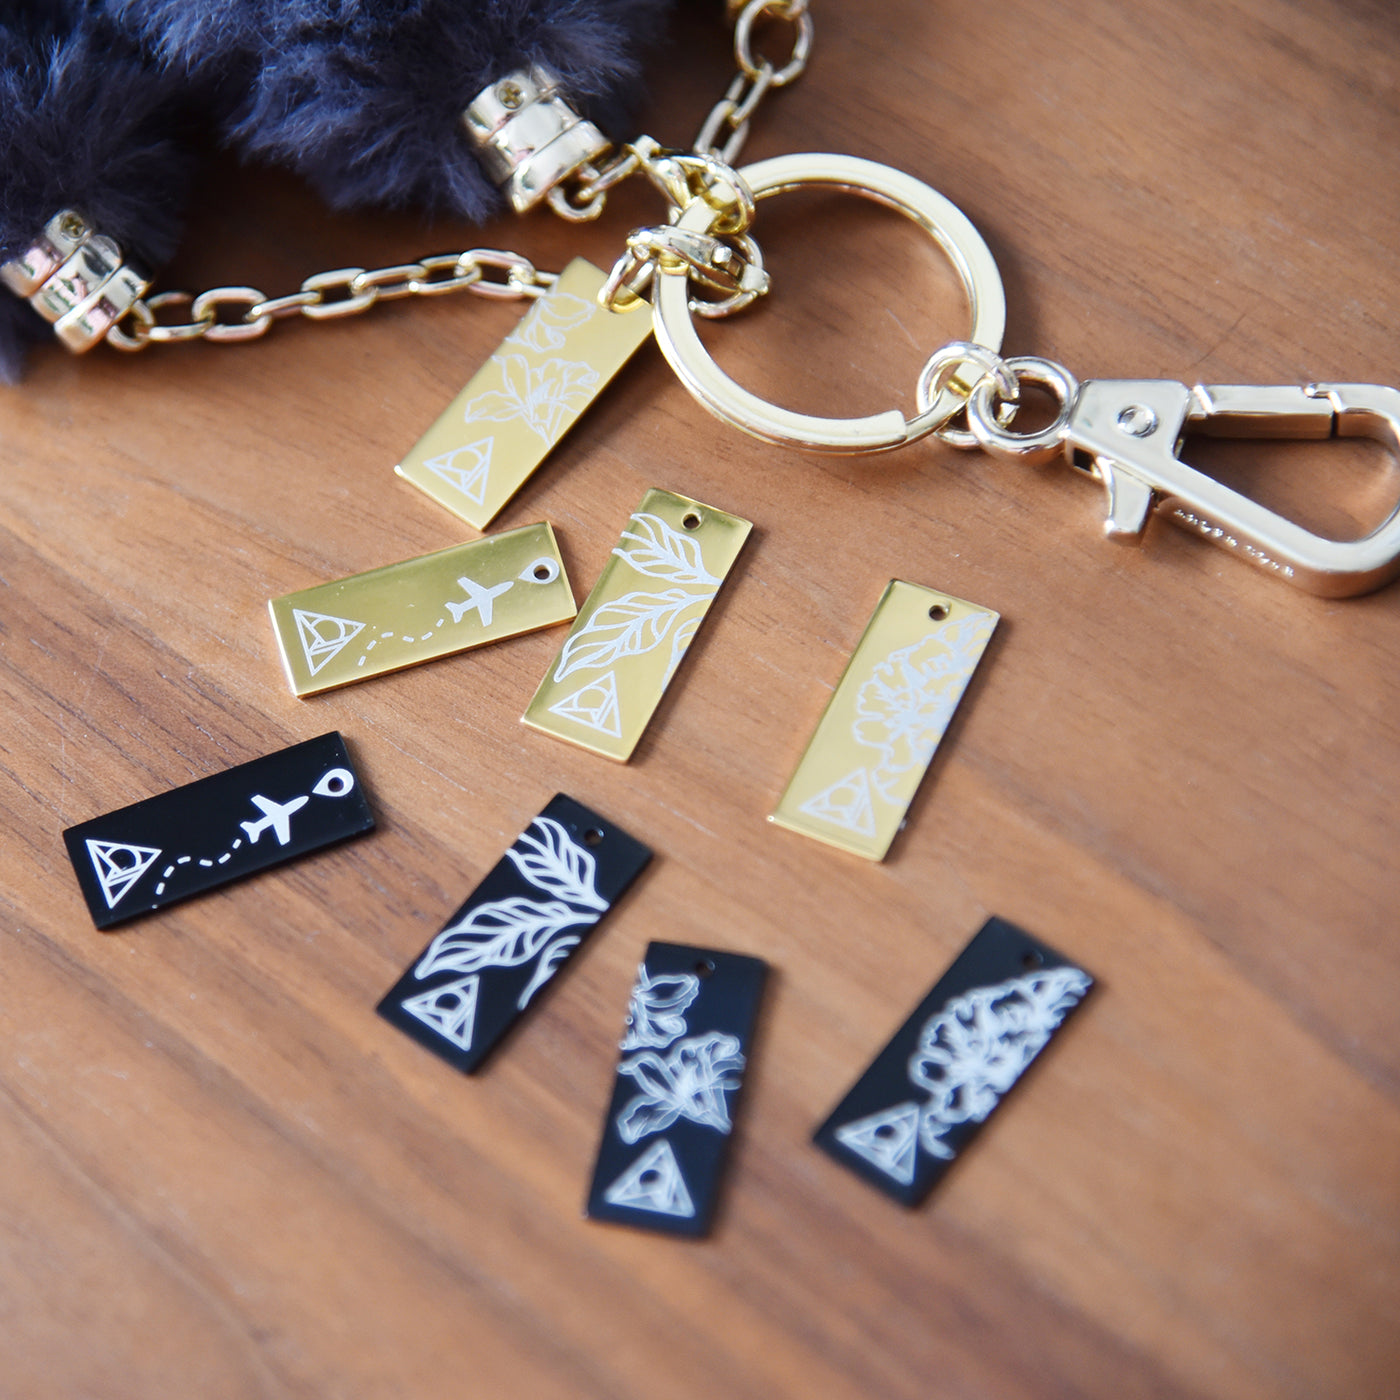 Keychain with Fuzzy Bracelet Close up of fur color and charm design alongside bracelet